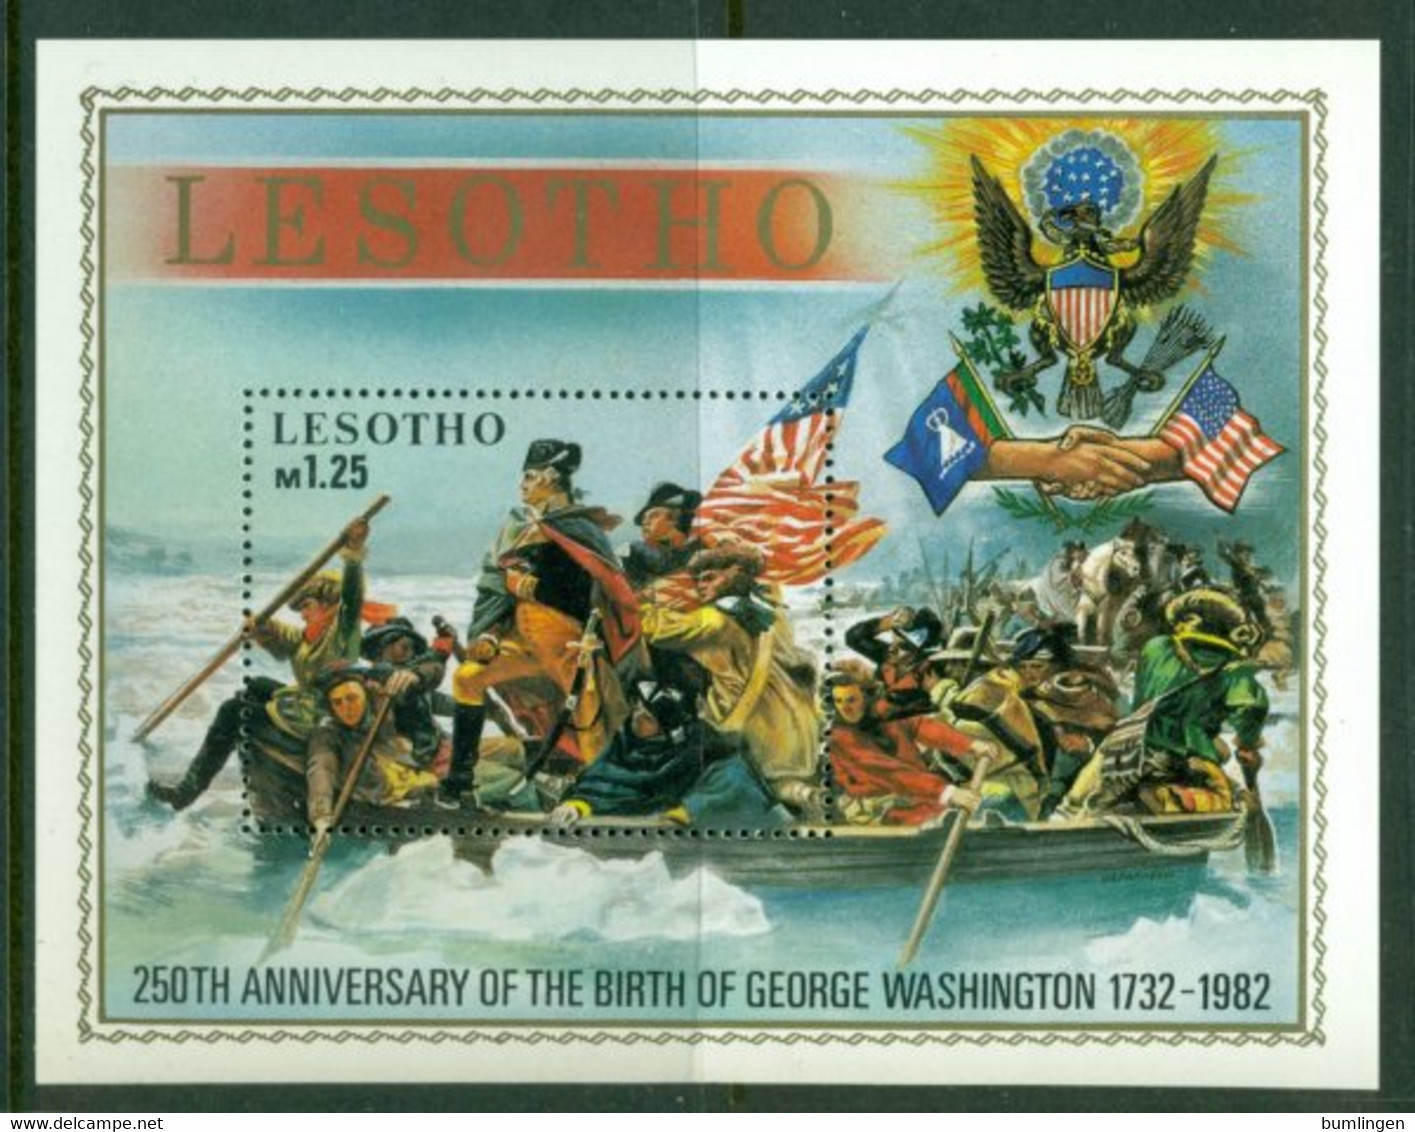 LESOTHO 1982 Mi BL 15** 250th Anniversary Of The Birth Of George Washington [DP1564] - George Washington